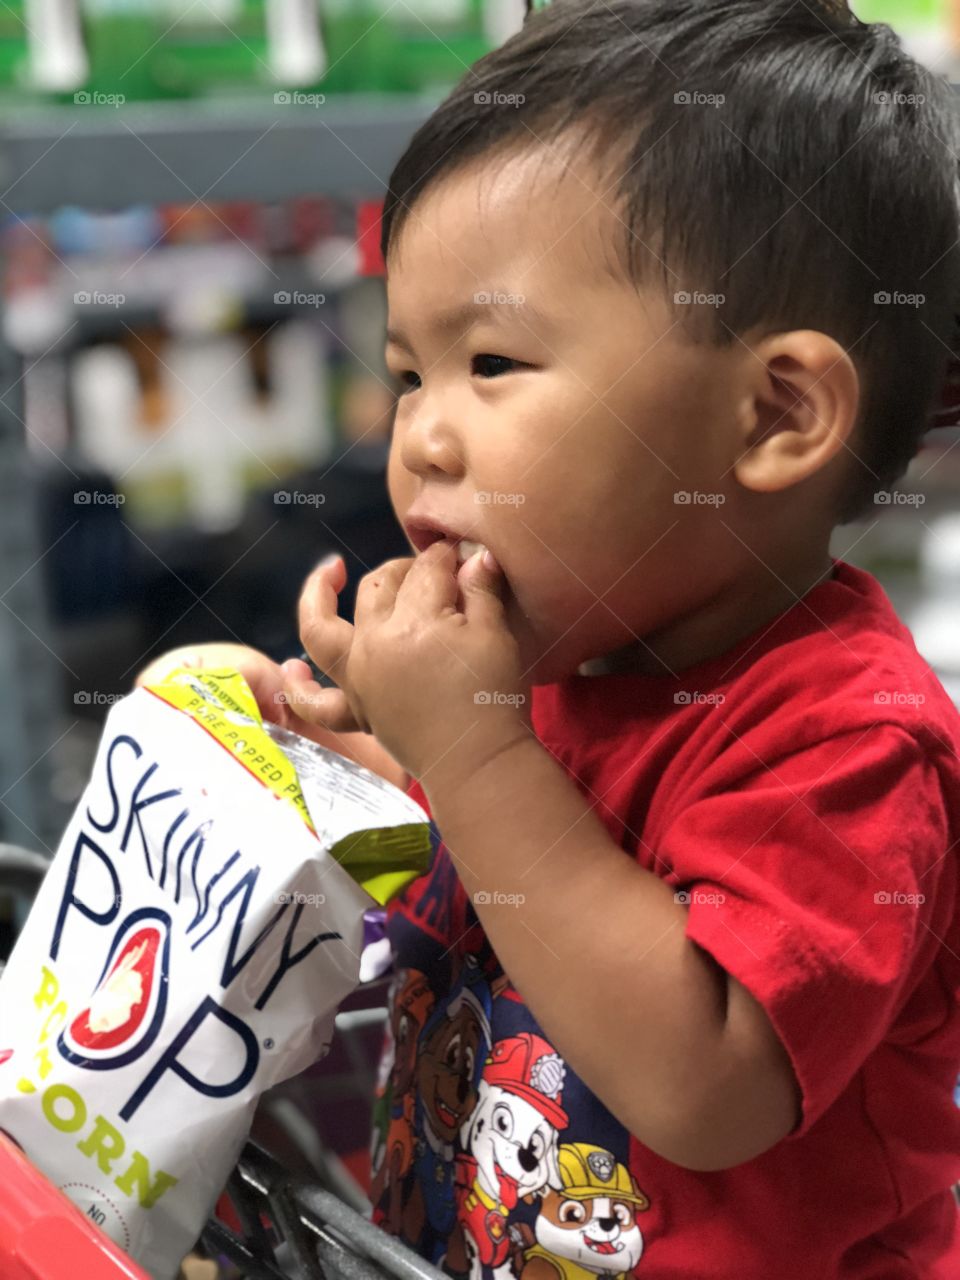 My Skinny Pop Popcorn Toddler-Loving every crunch